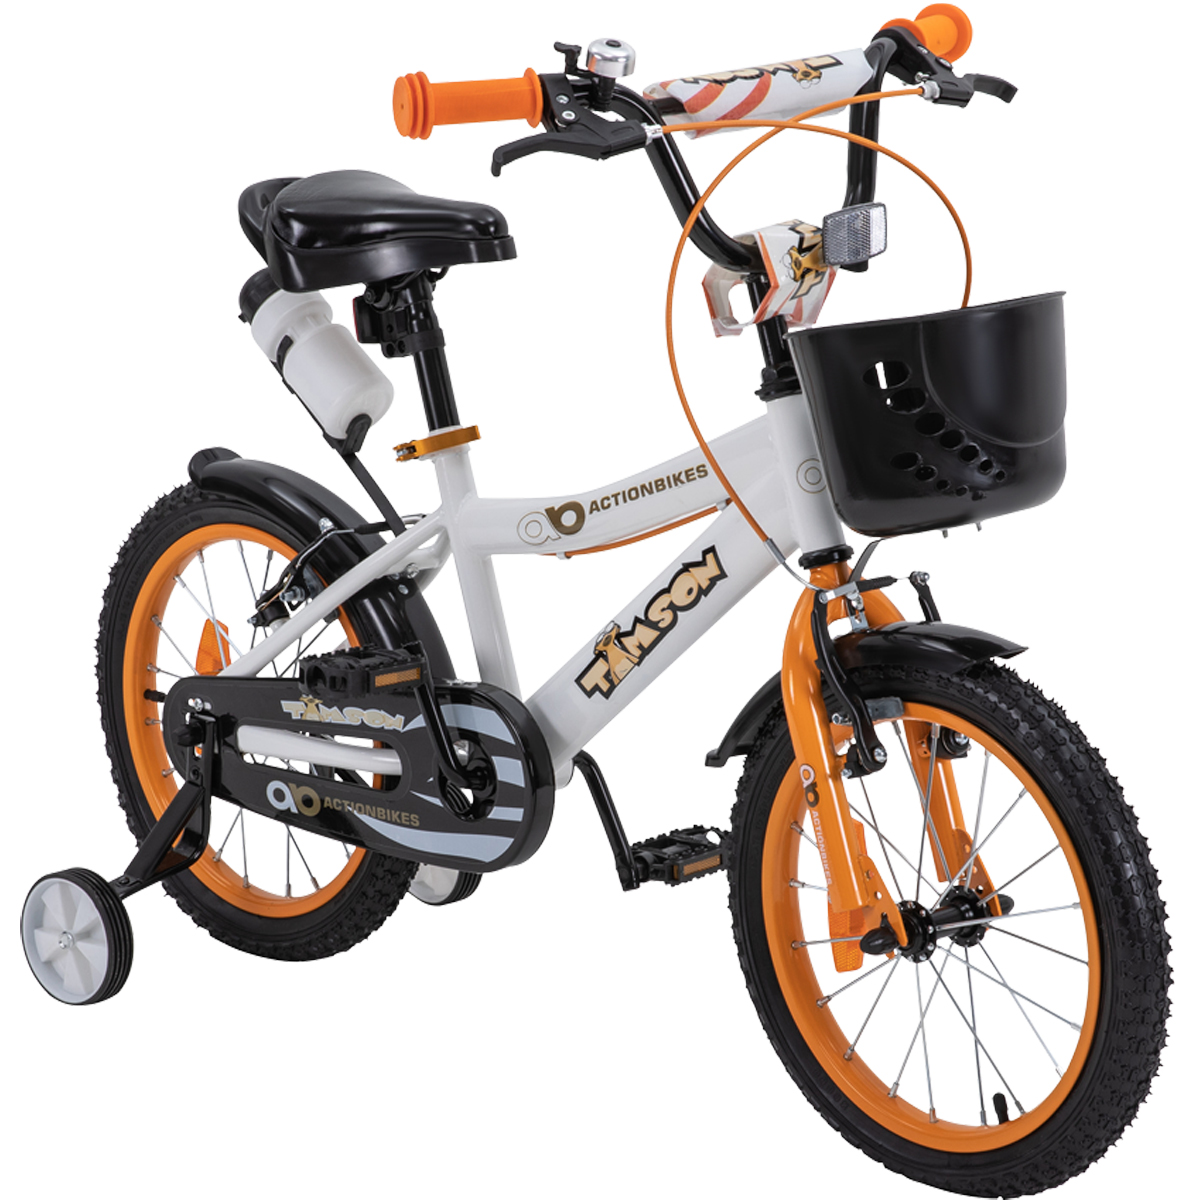 Kinderfahrrad Timson 16 Zoll: Actionbikes Fahrrad